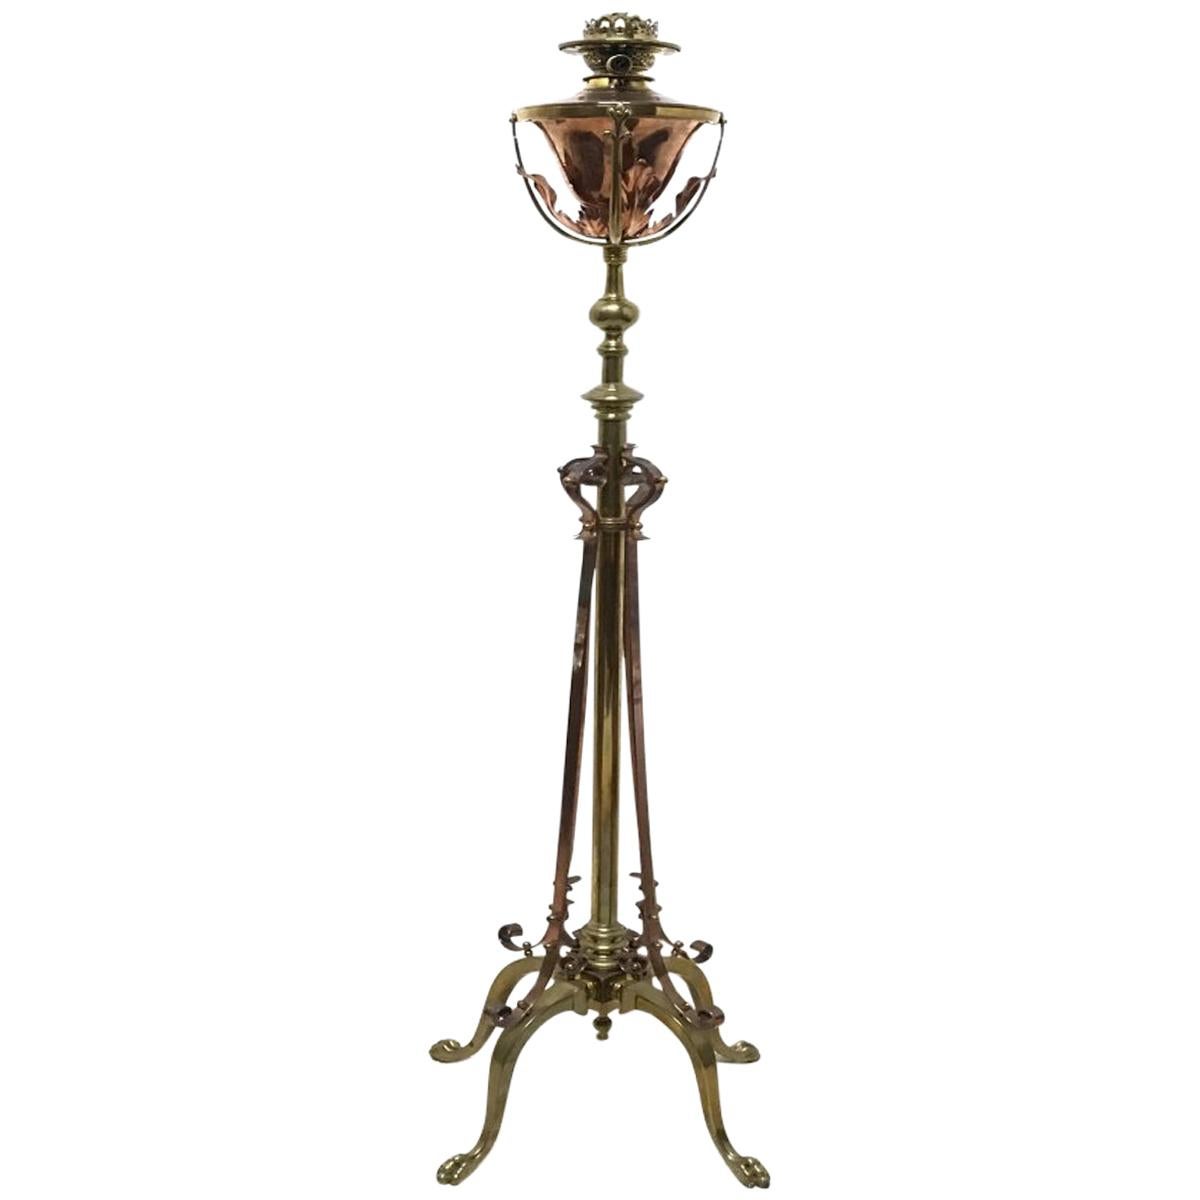 W A S Benson, An Arts & Crafts Copper and Brass Telescopic Standard Oil Lamp